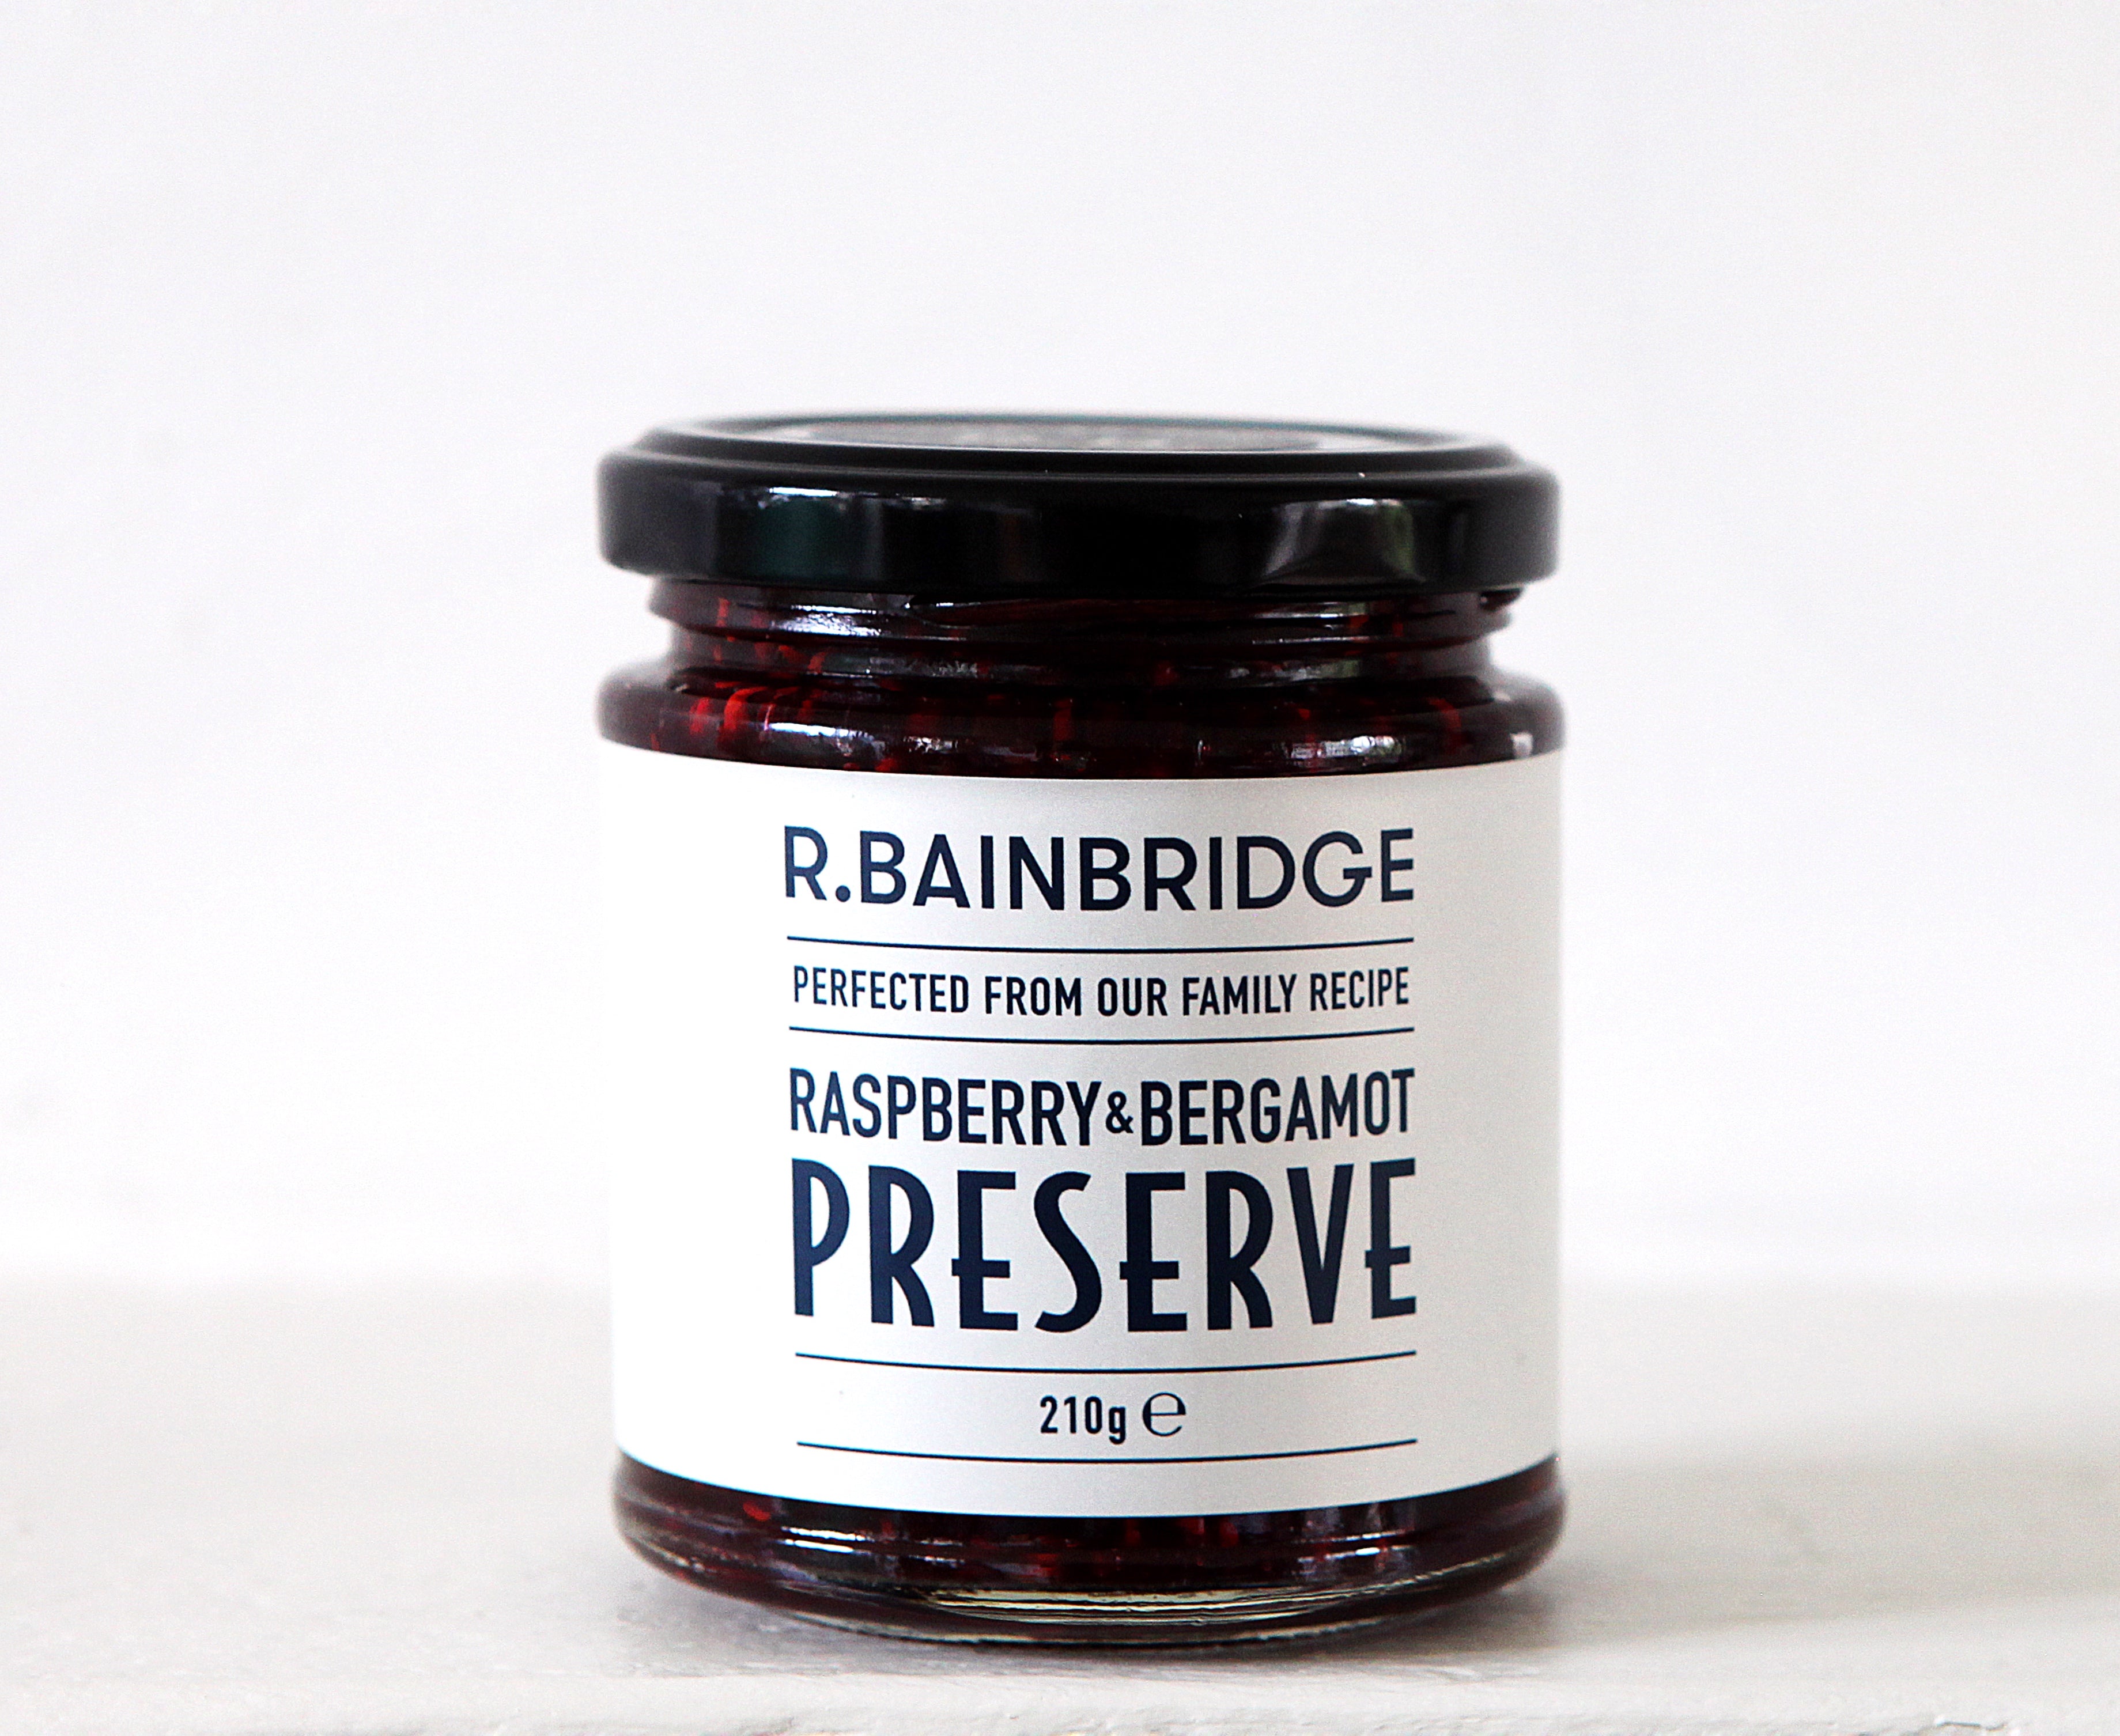 Raspberry & Bergamot Preserve - 210g